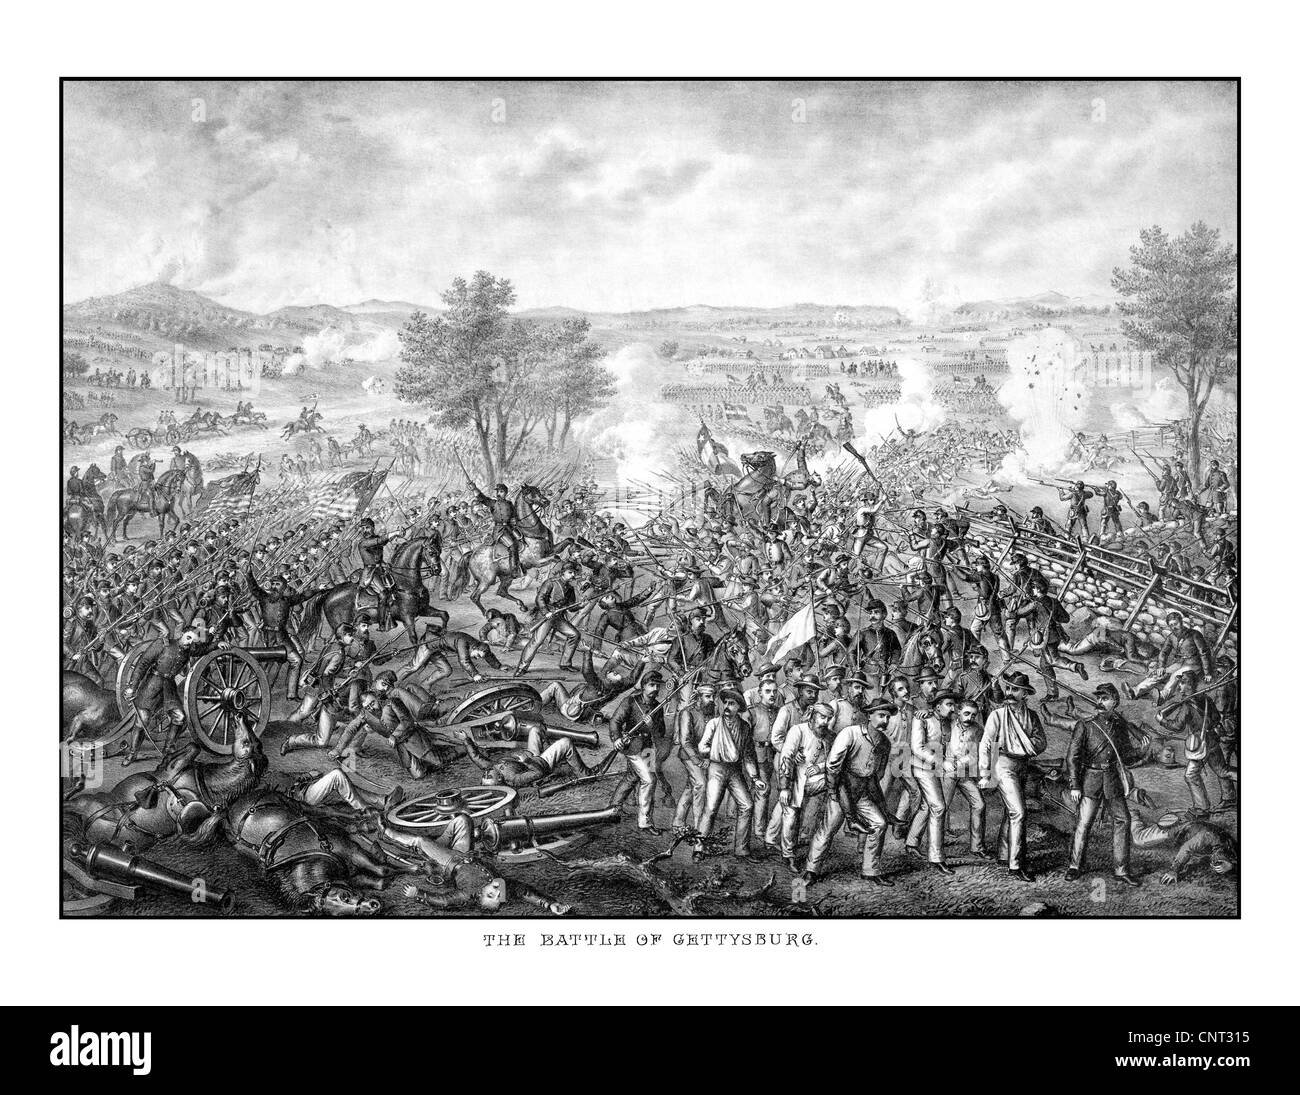 Vintage Civil War print featuring the Battle of Gettysburg. Stock Photo